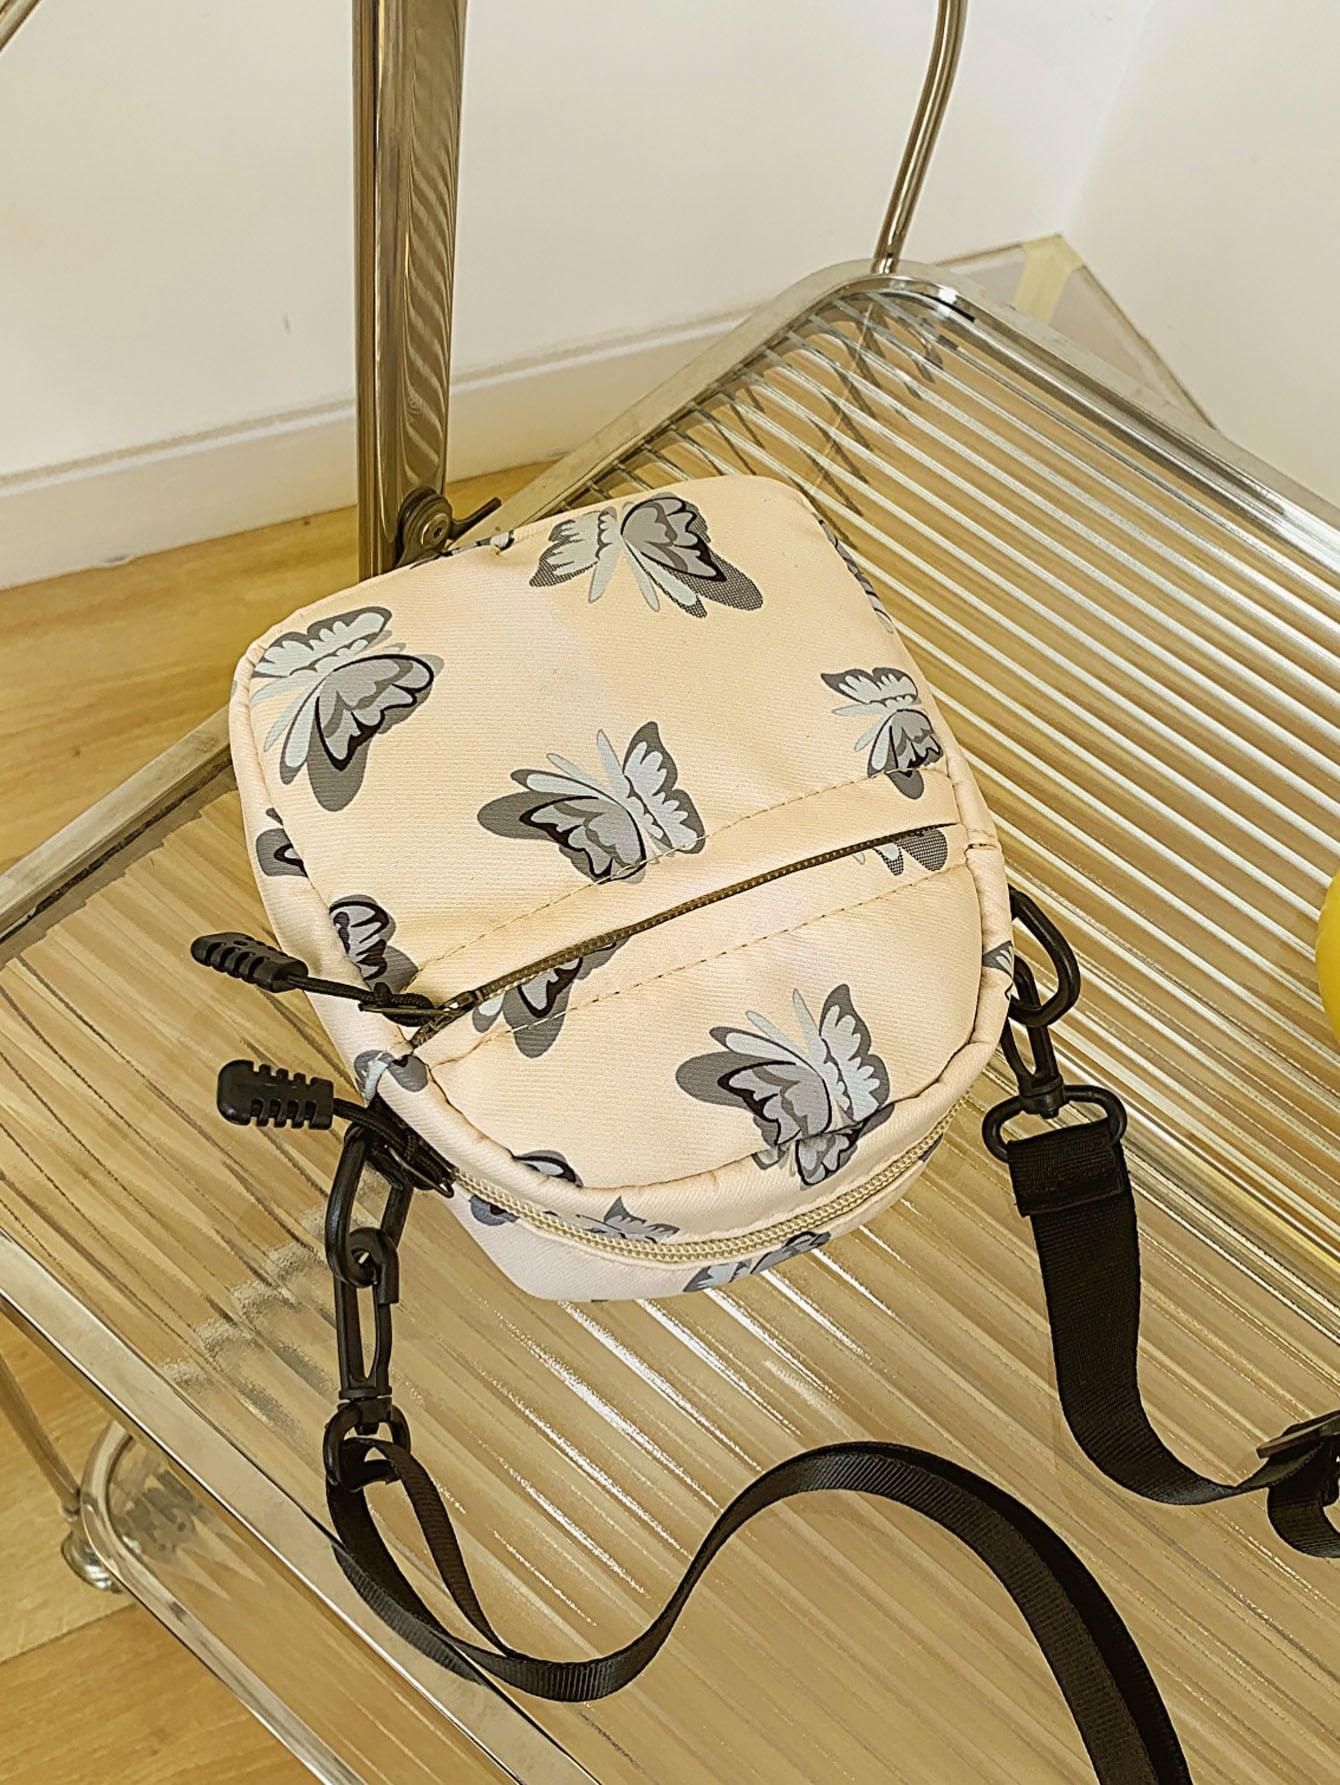 Butterfly Print Polyester Shoulder Bag - Closet of Ren